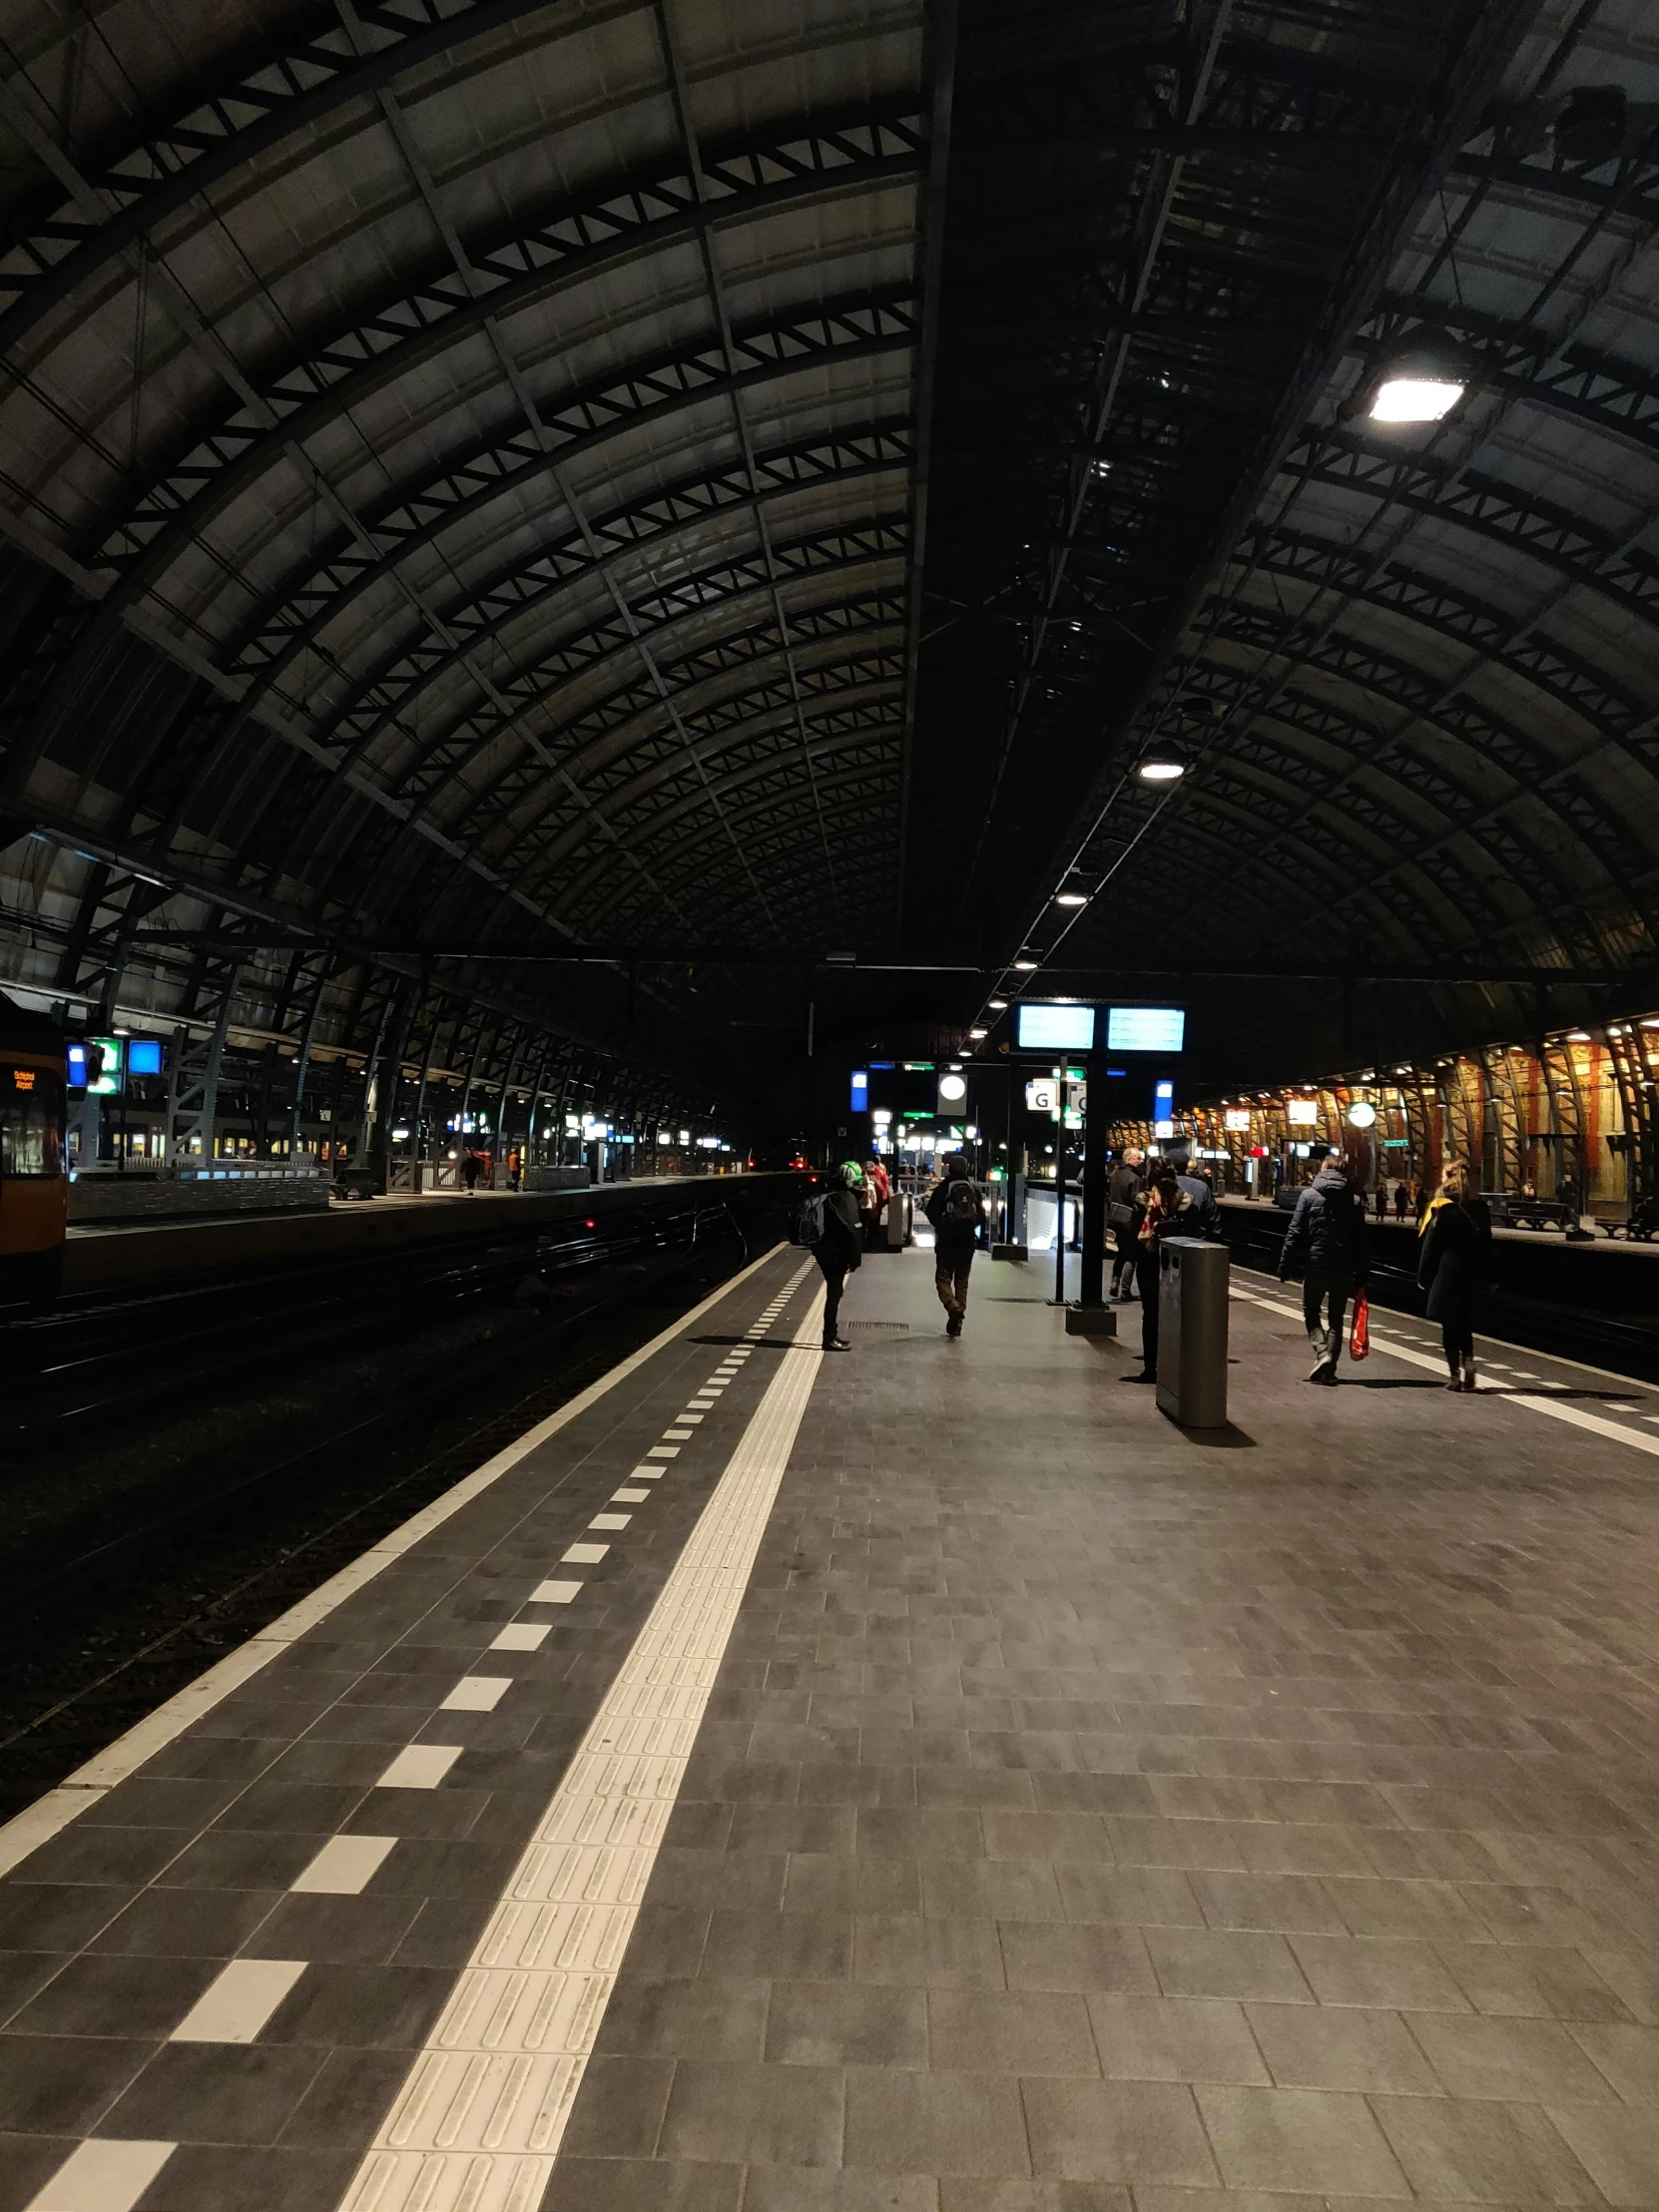 people walking across a train station platform at night